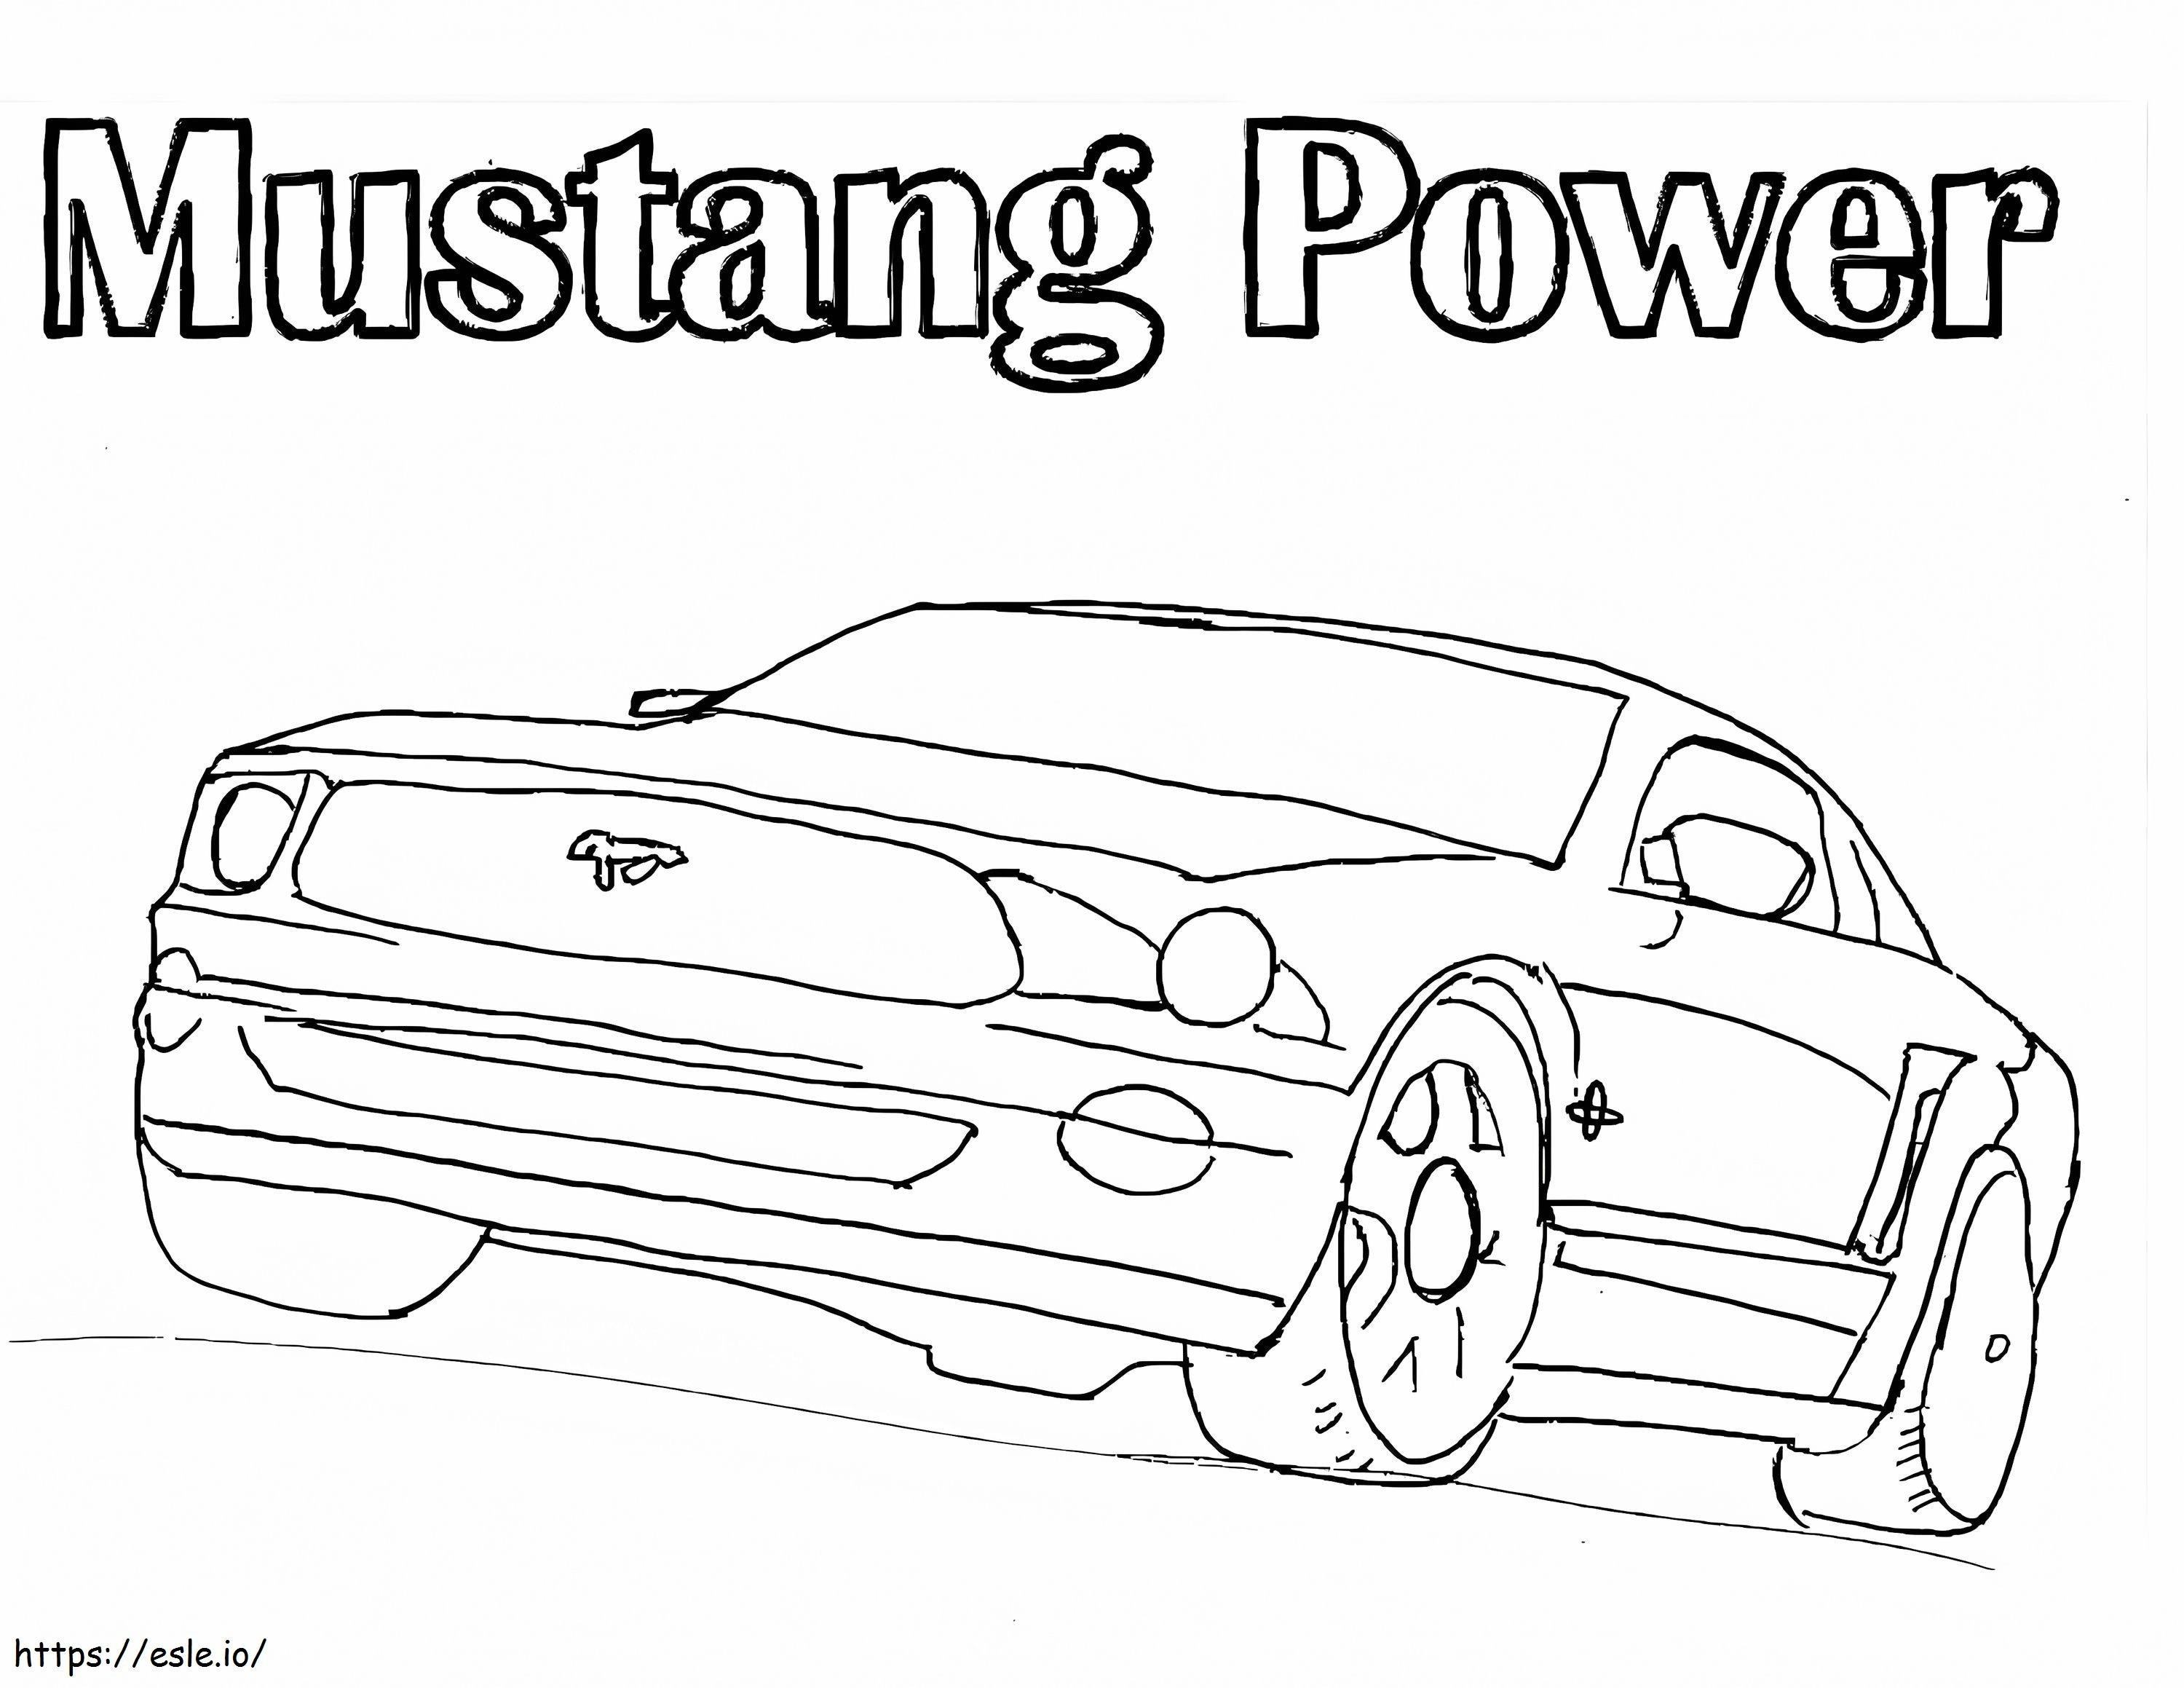 Mustang Power kifestő